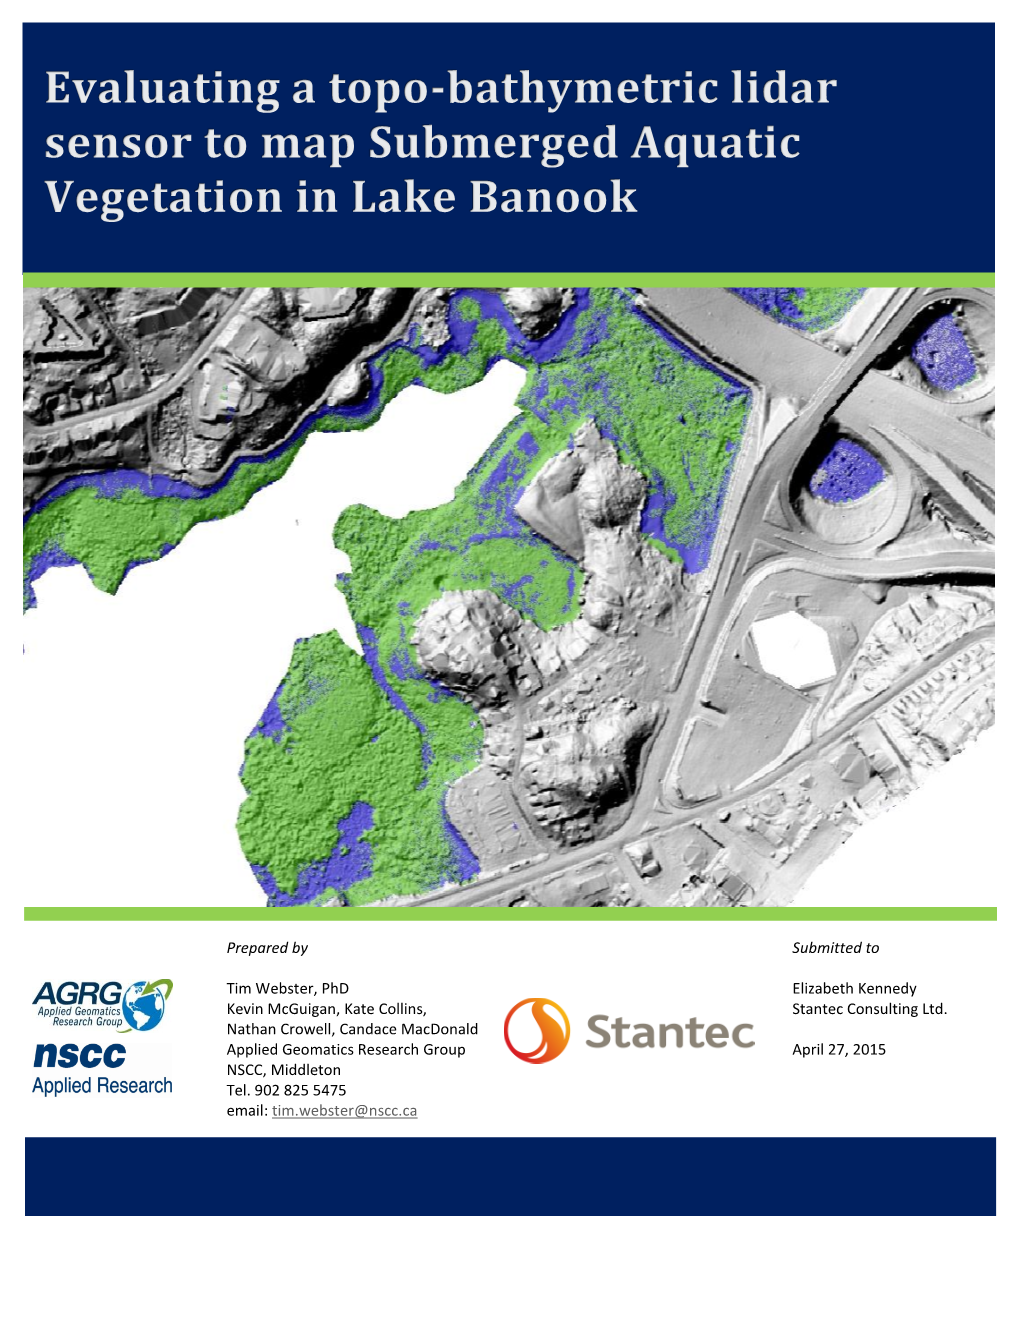 Bathymetric Lidar Mapping of Submerged Aquatic Vegetation